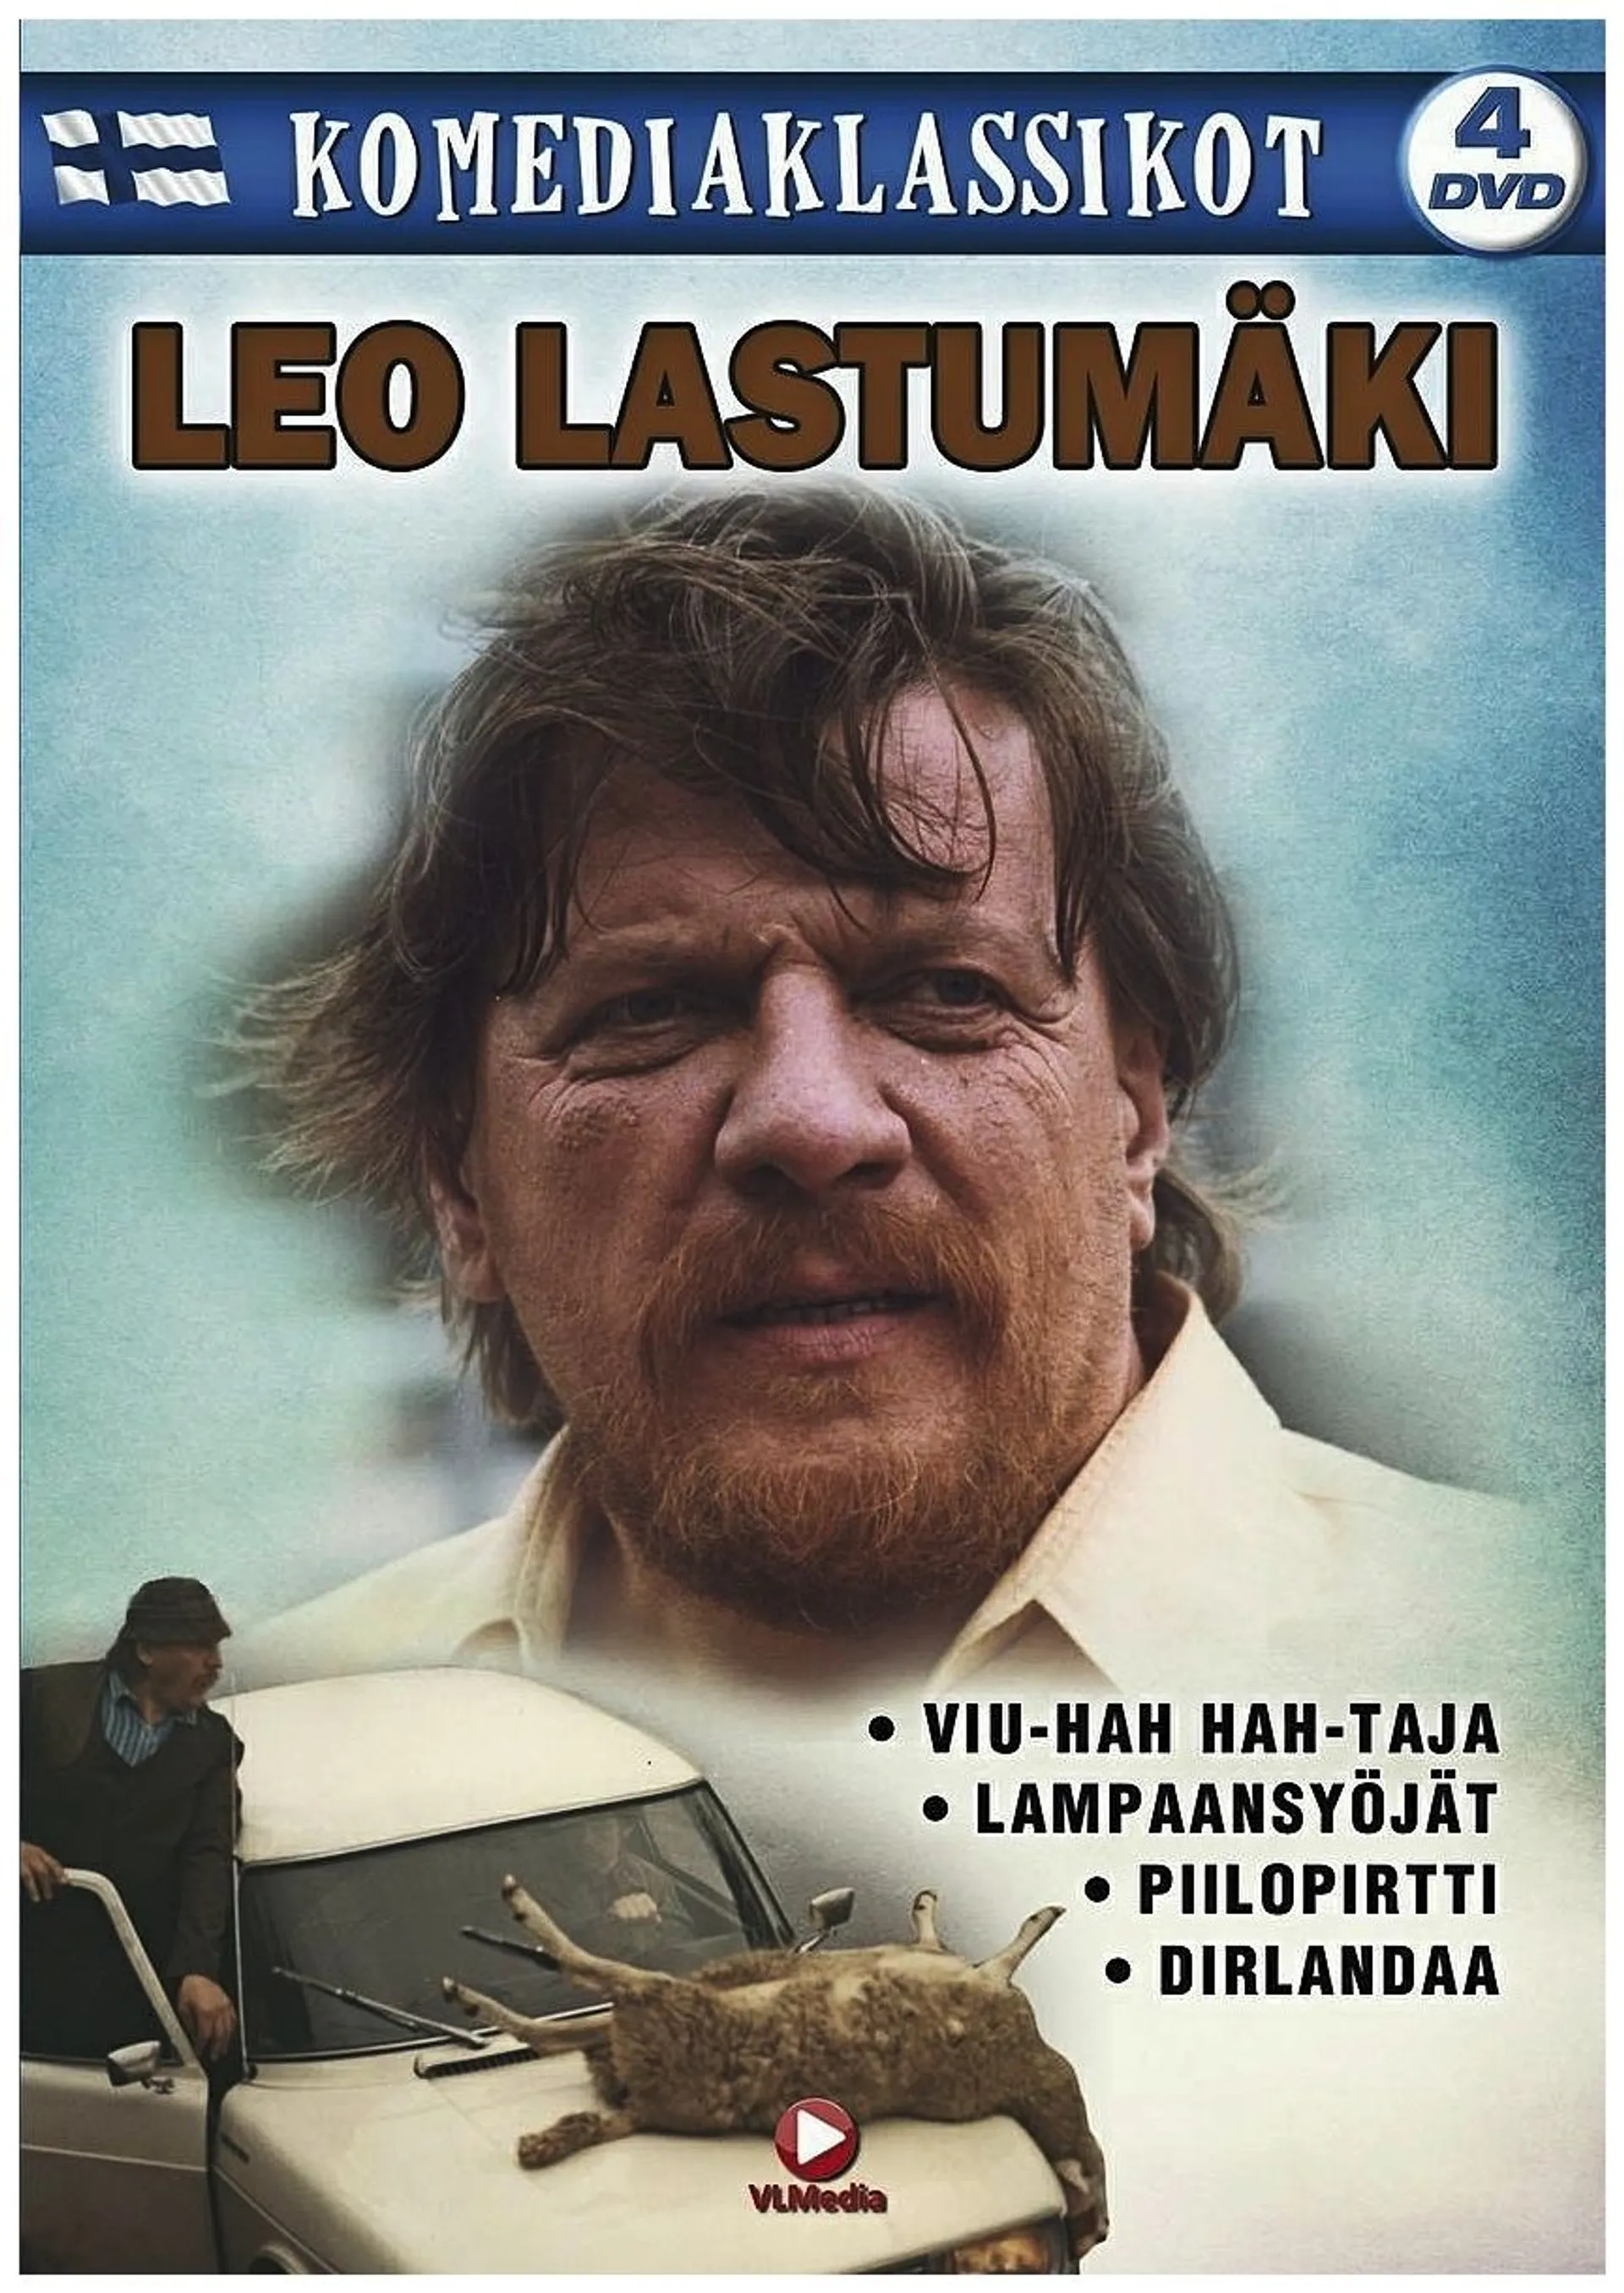 Komediaklassikot - Leo Lastumäki 4DVD